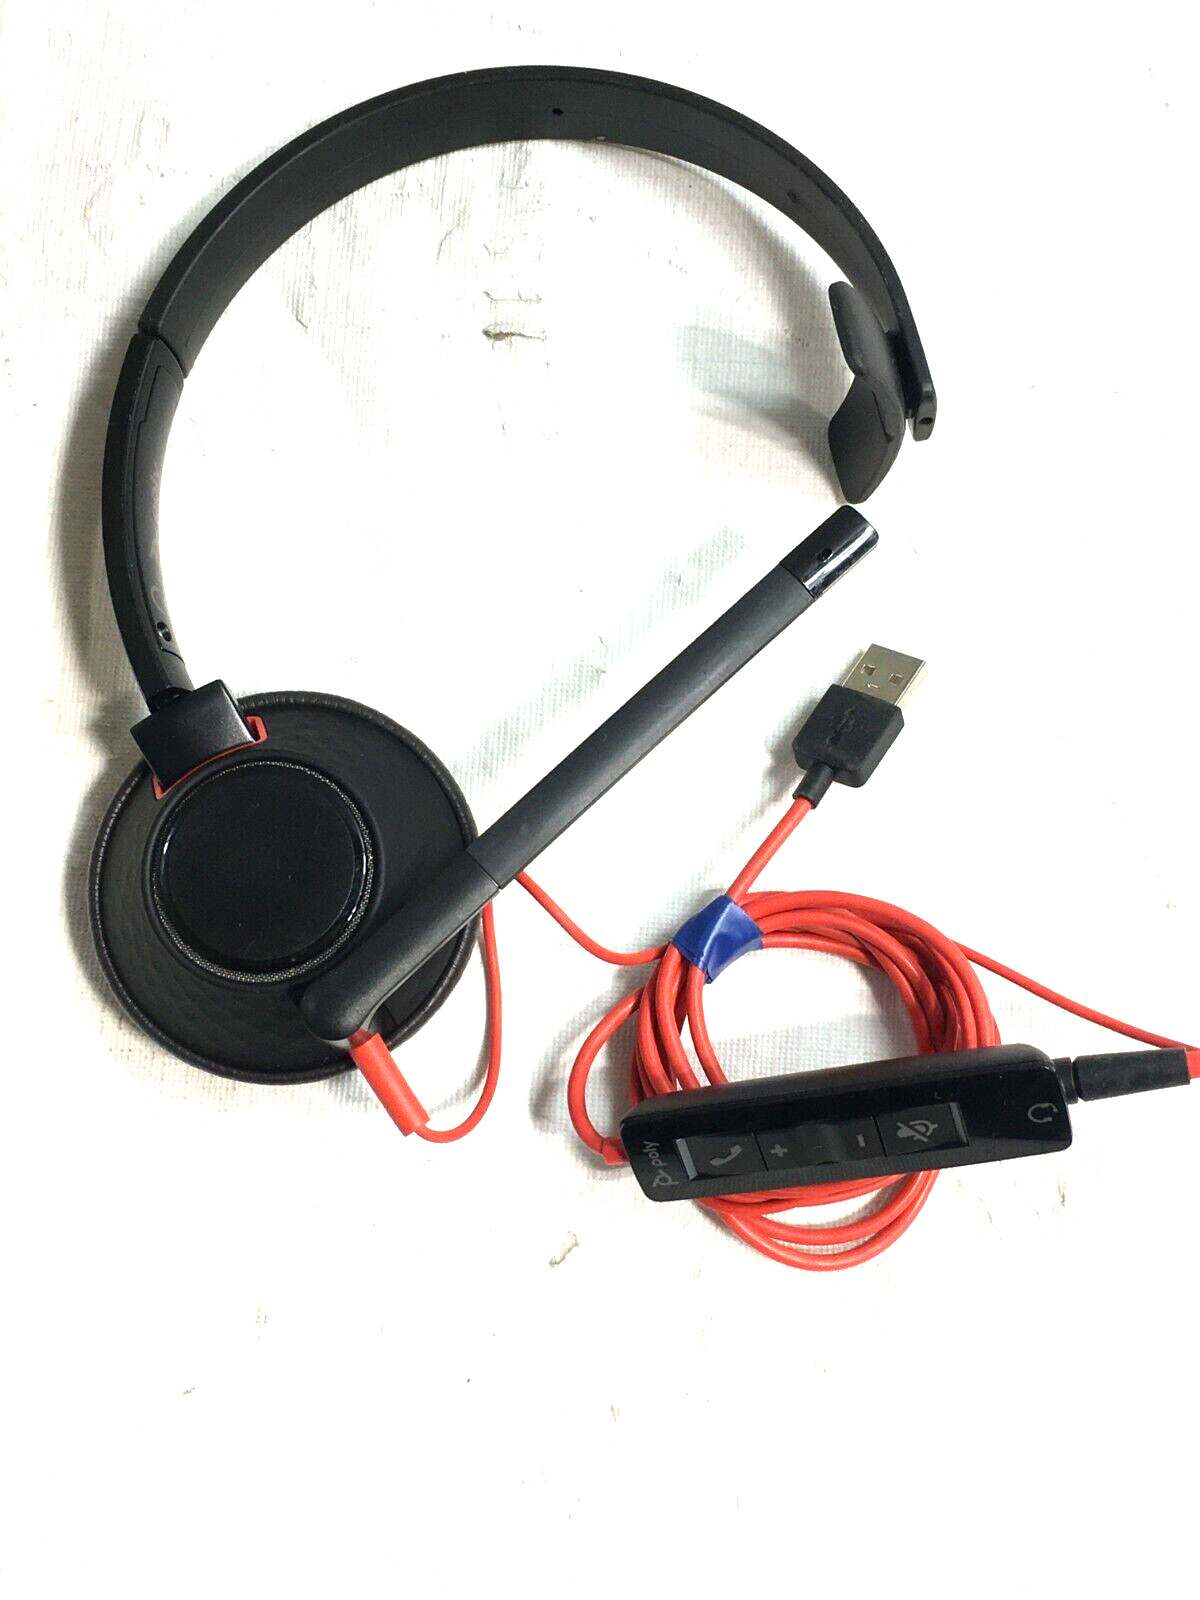 (LOT OF 9) Plantronics C5200 USB Wired Headset Headphones